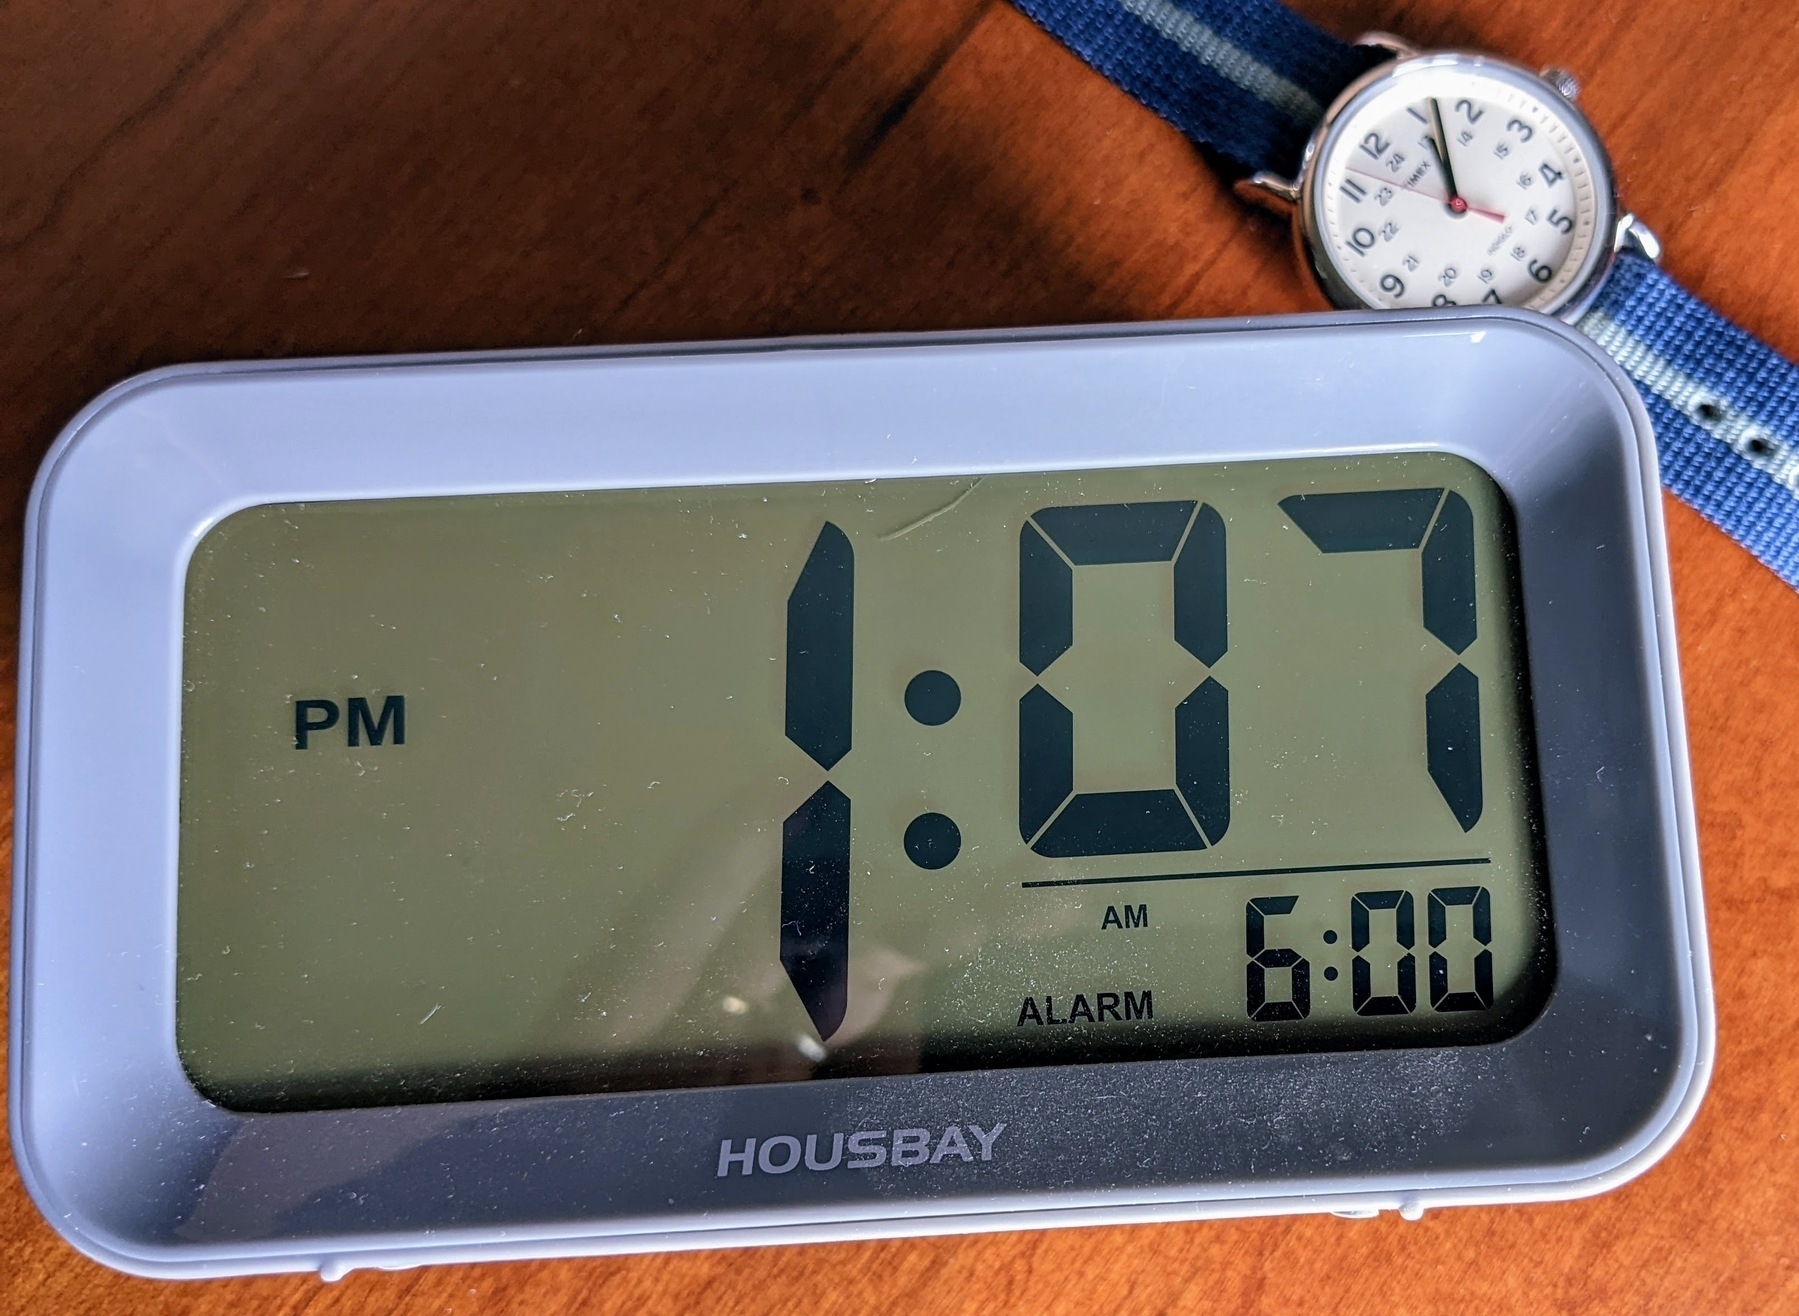 a digital bedside alarm clock next to a Timex wrist watch